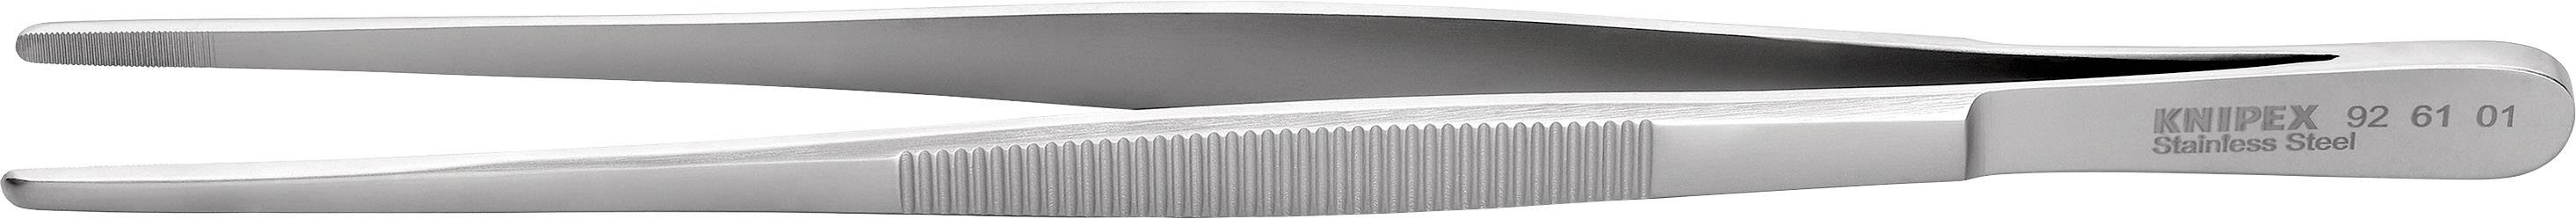 KNIPEX 92 61 01 Universalpinzette 1 Stück Stumpf 200 mm